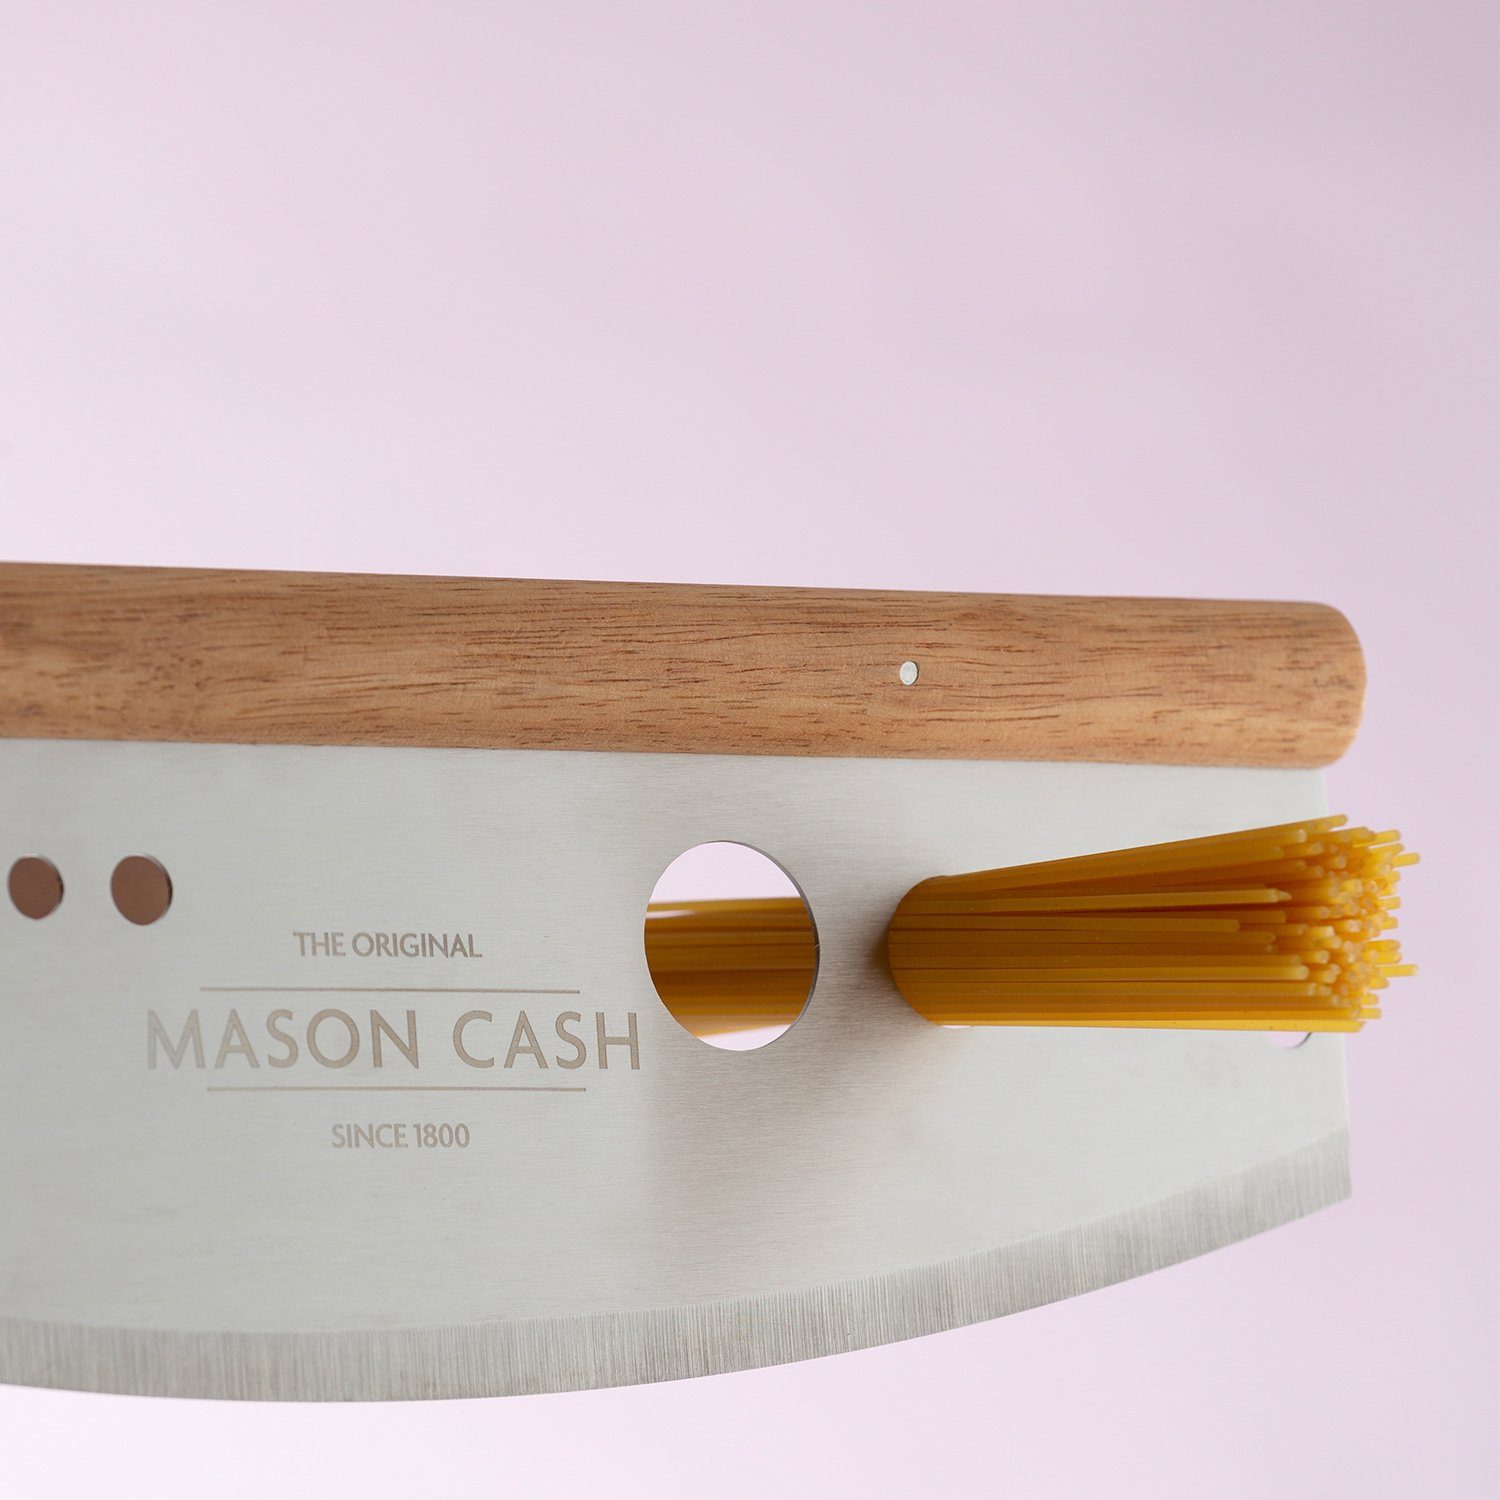 Mason Cash Pizzaschneider, 3in1-Funktion, Edelstahl, Holz